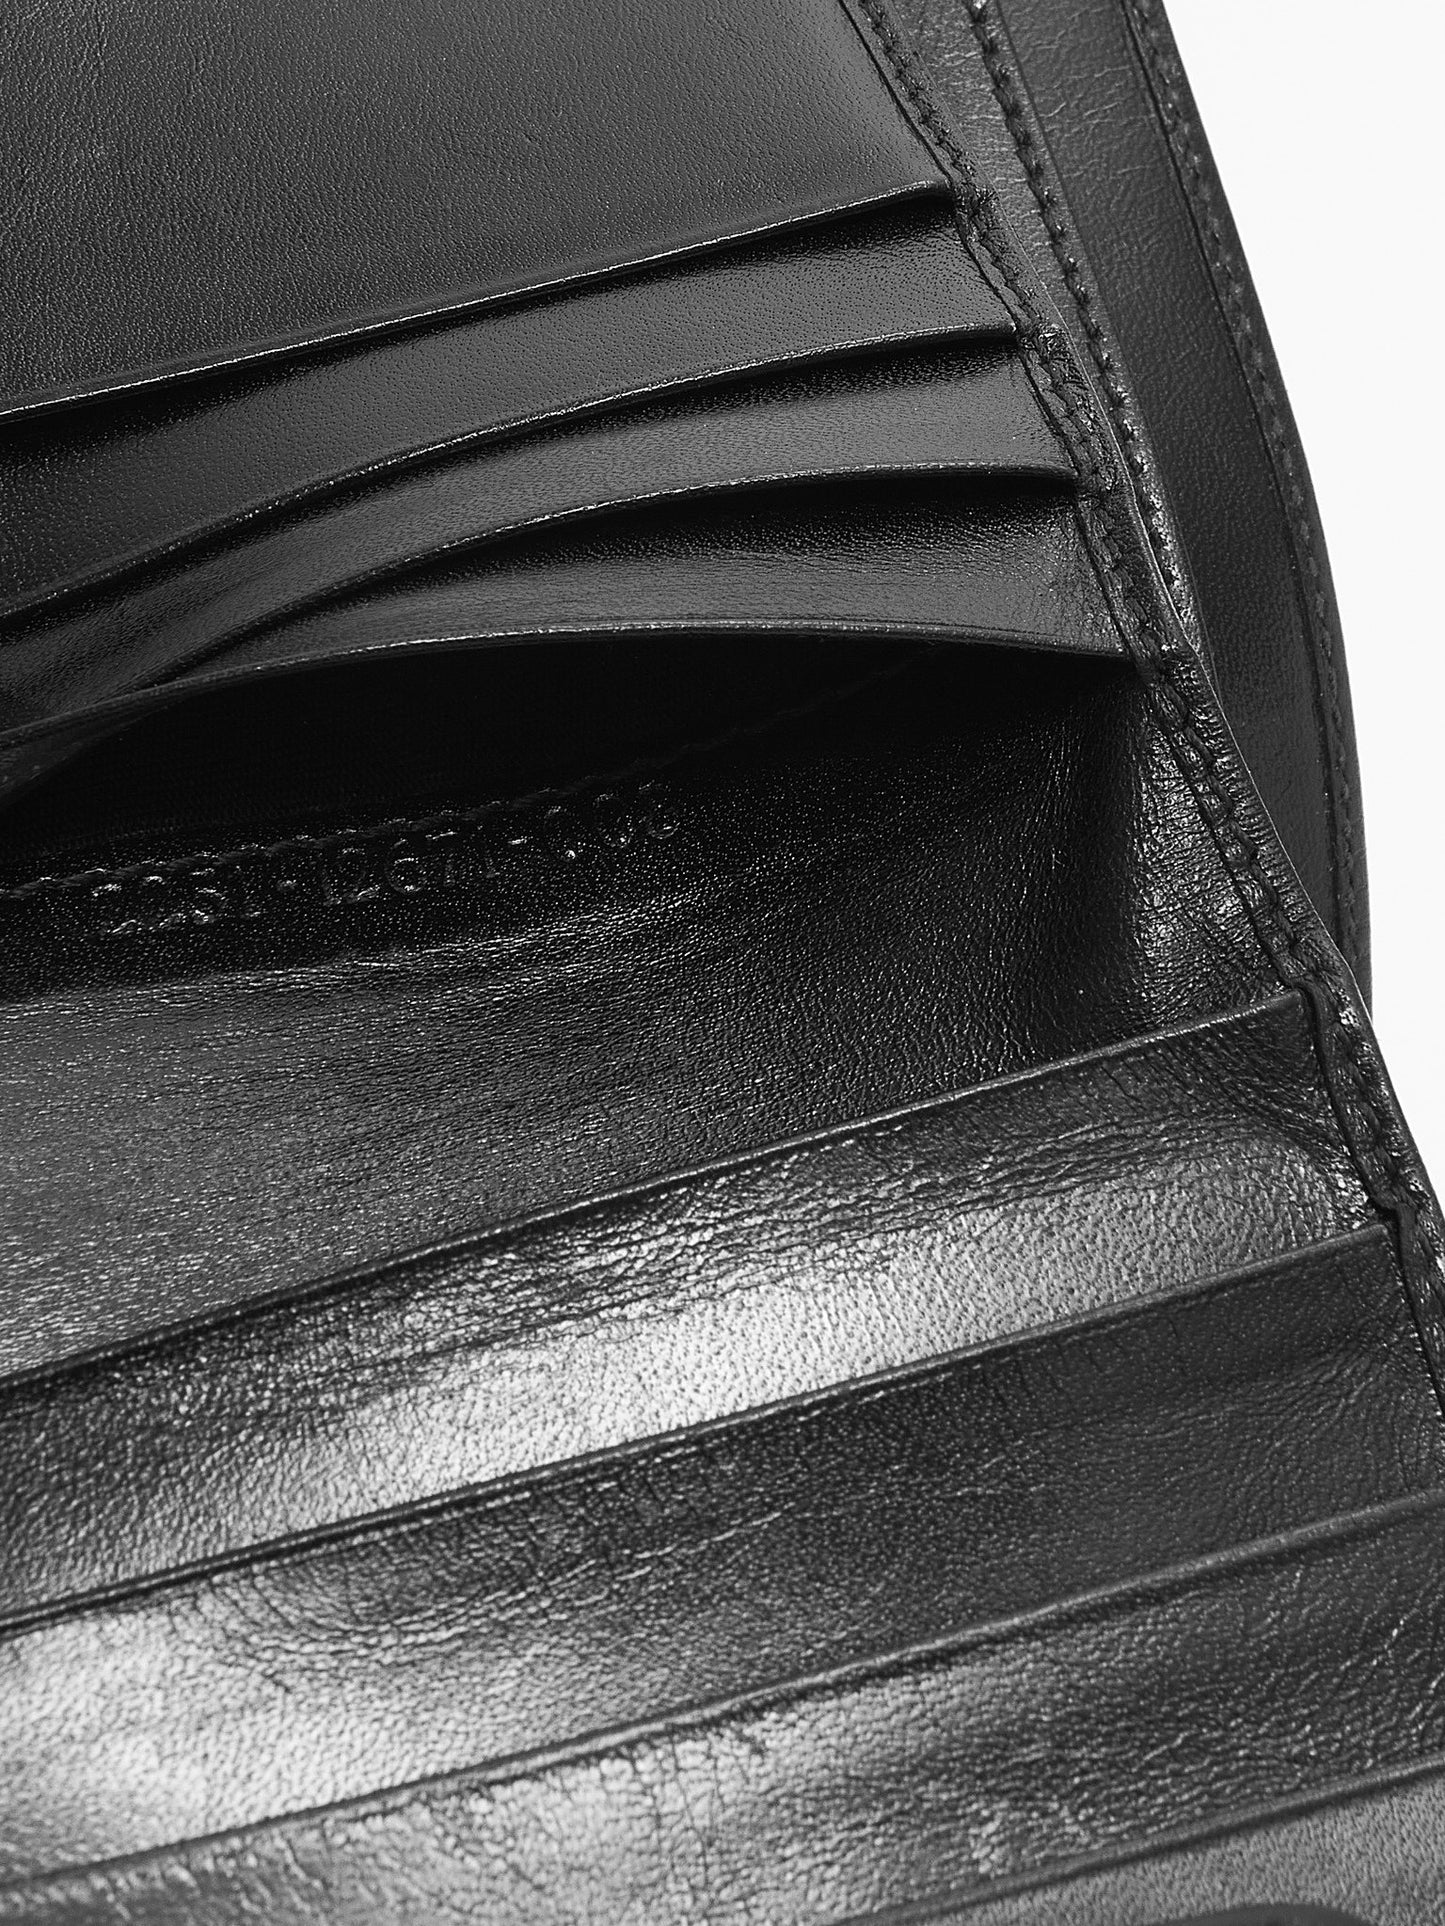 Fendi Black Leather Compact Wallet